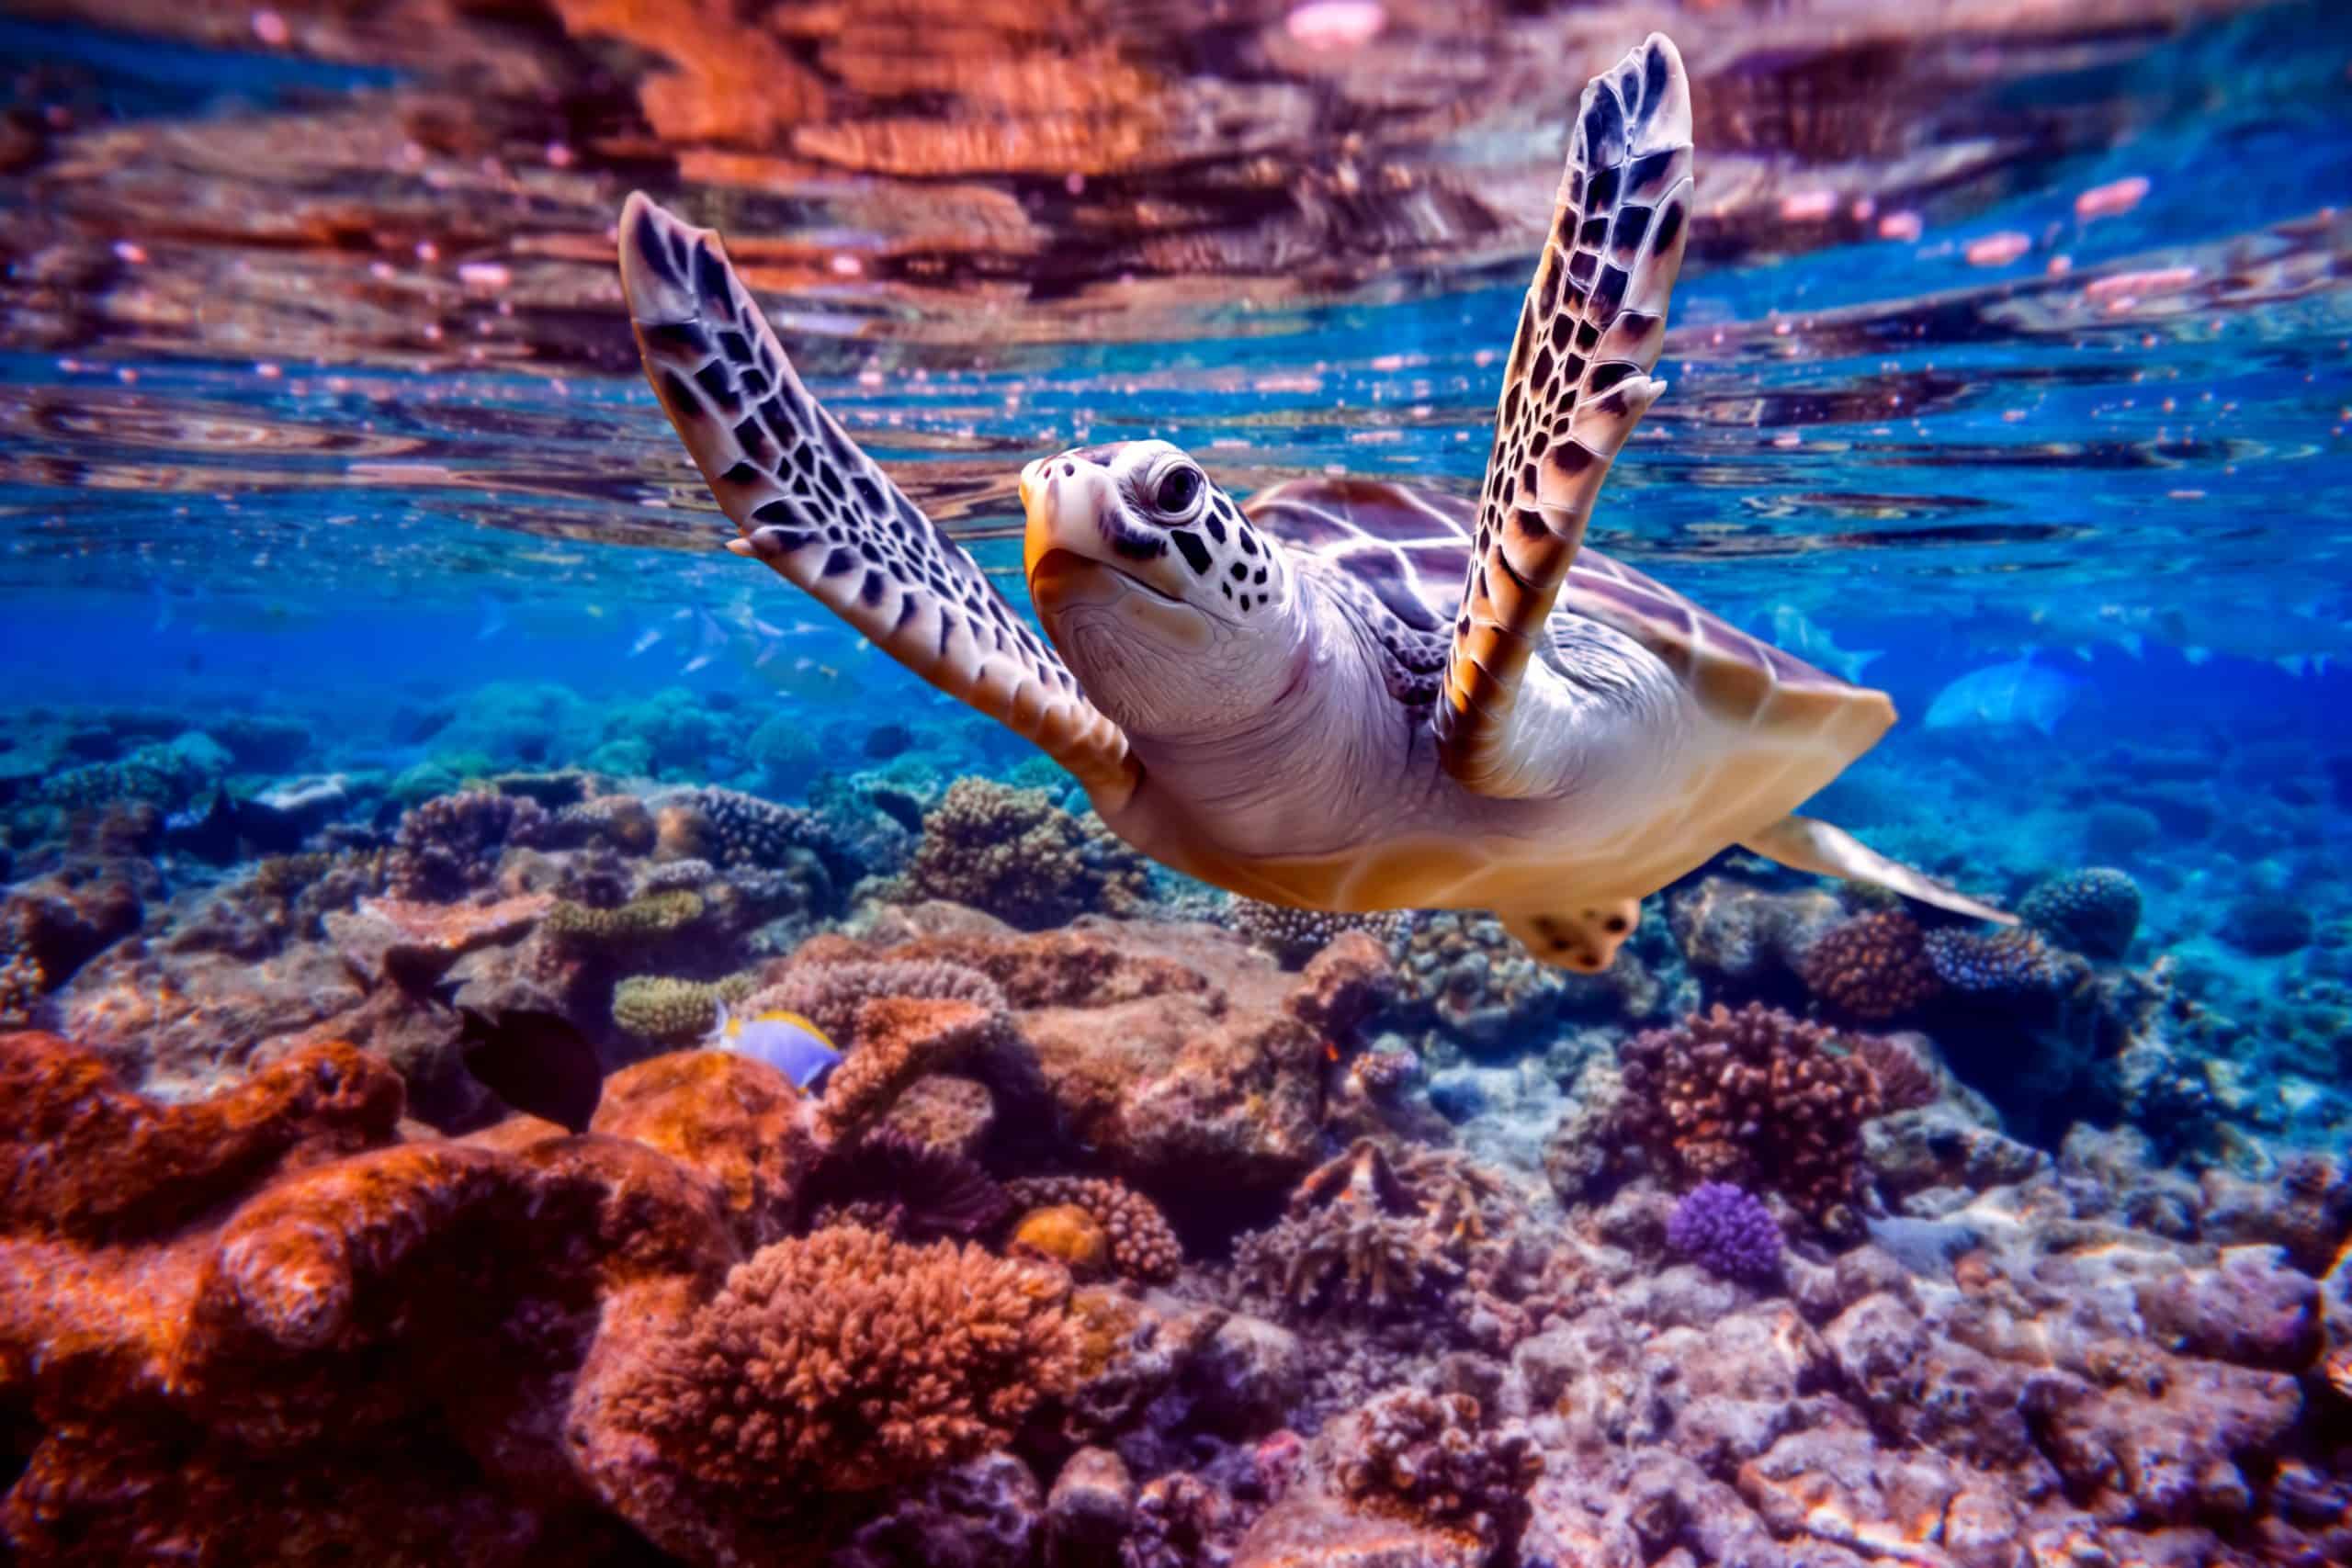 great underwater photos of animals